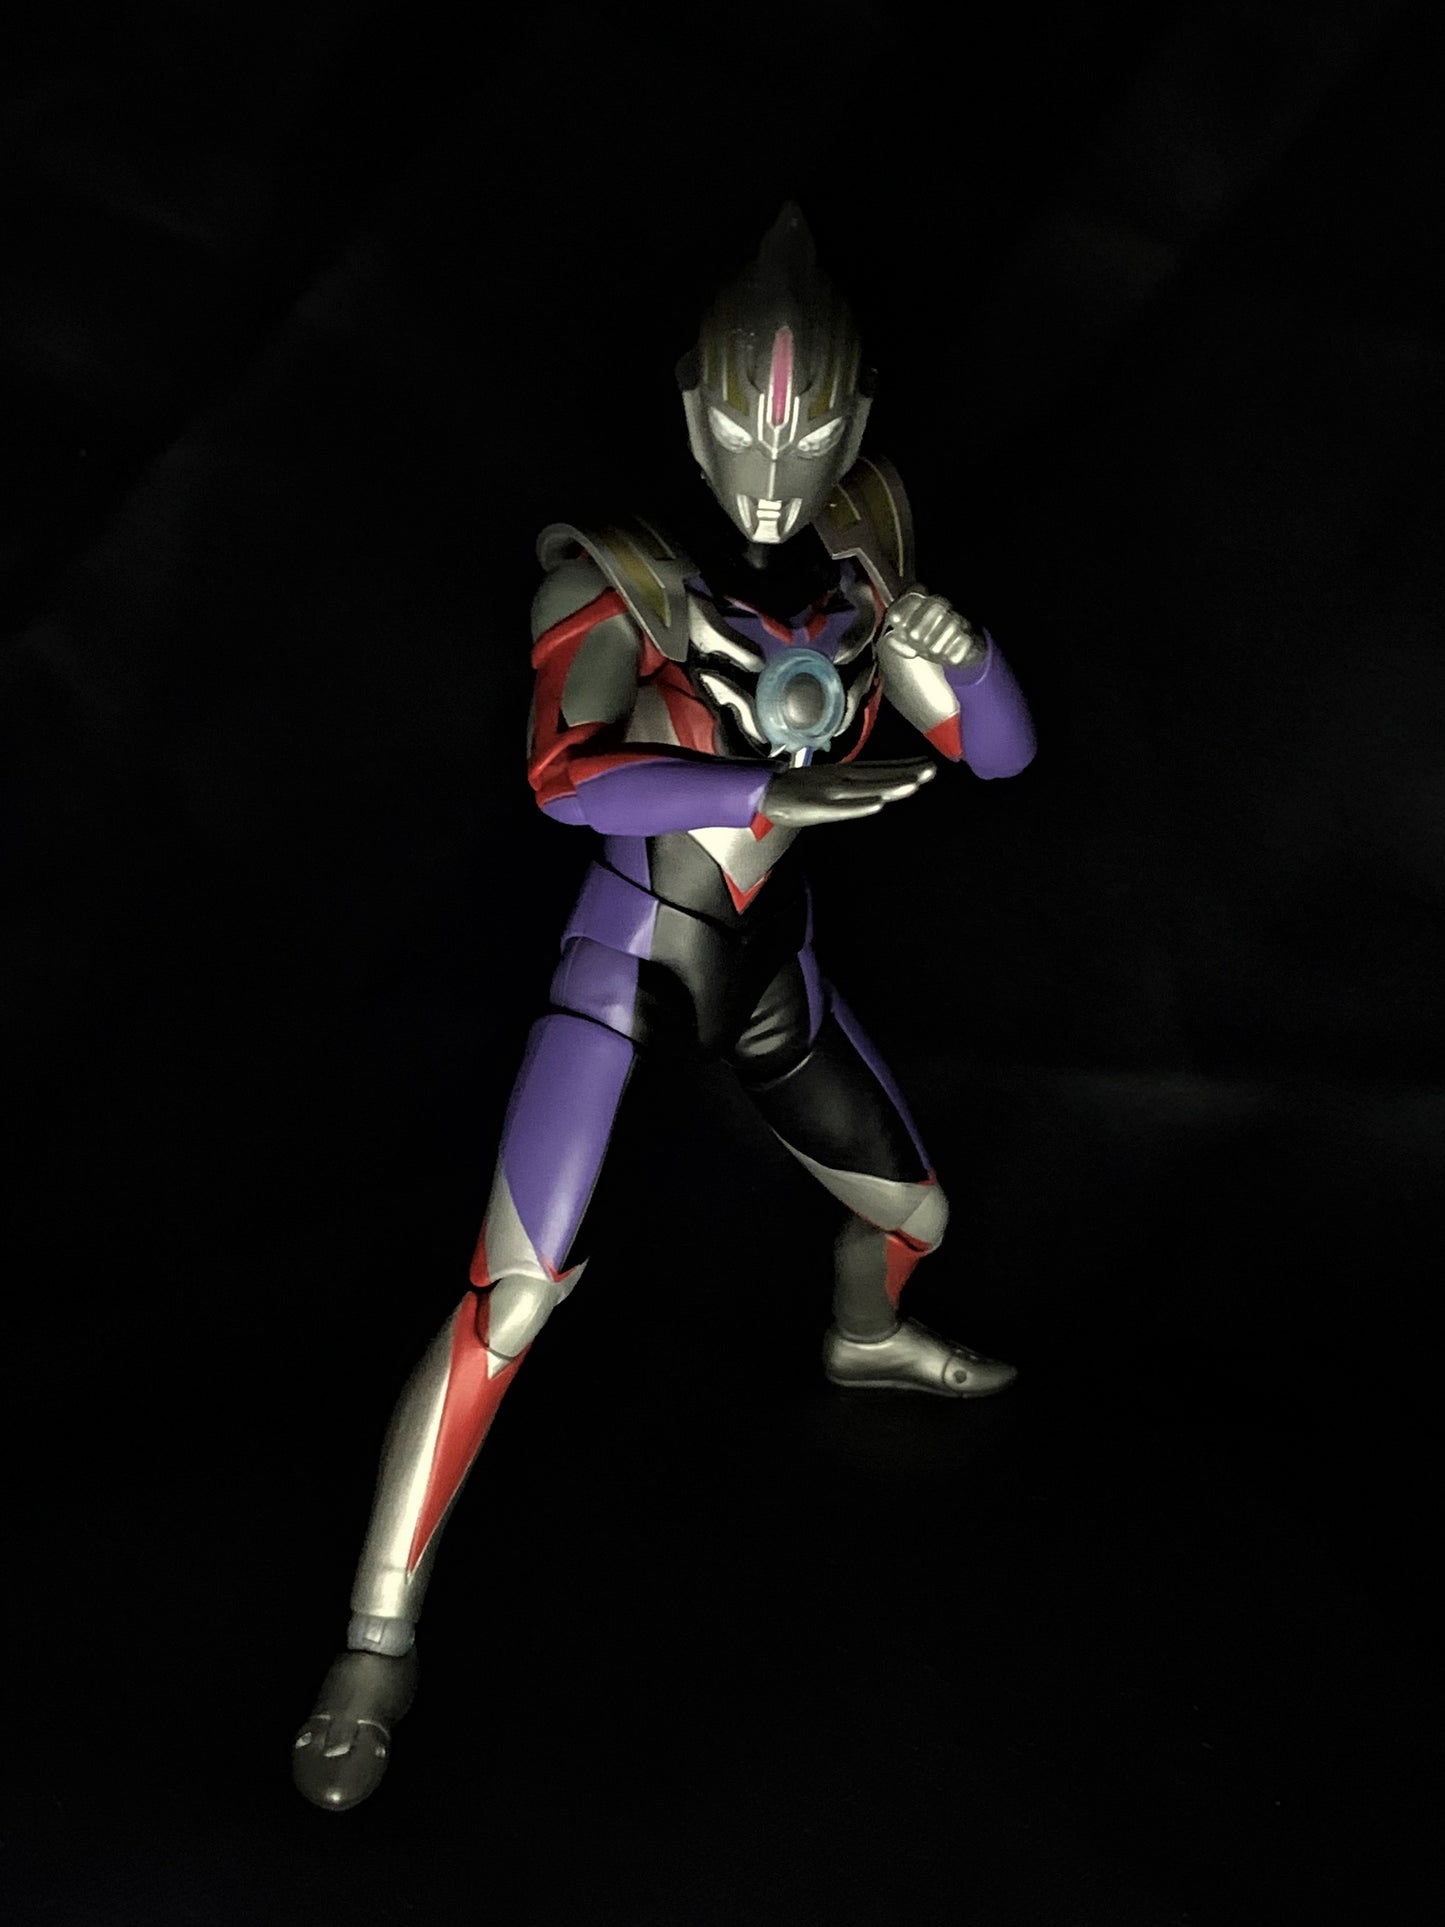 SHF Ultraman Orb Spacium Zeperion